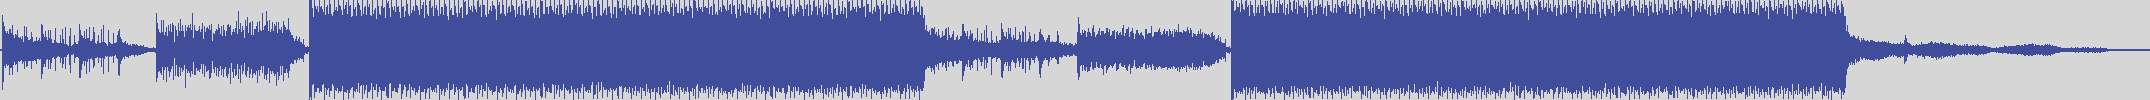 nf_boyz_records [NFY024] Severus Amon - Body Bag [Horror Mix] audio wave form